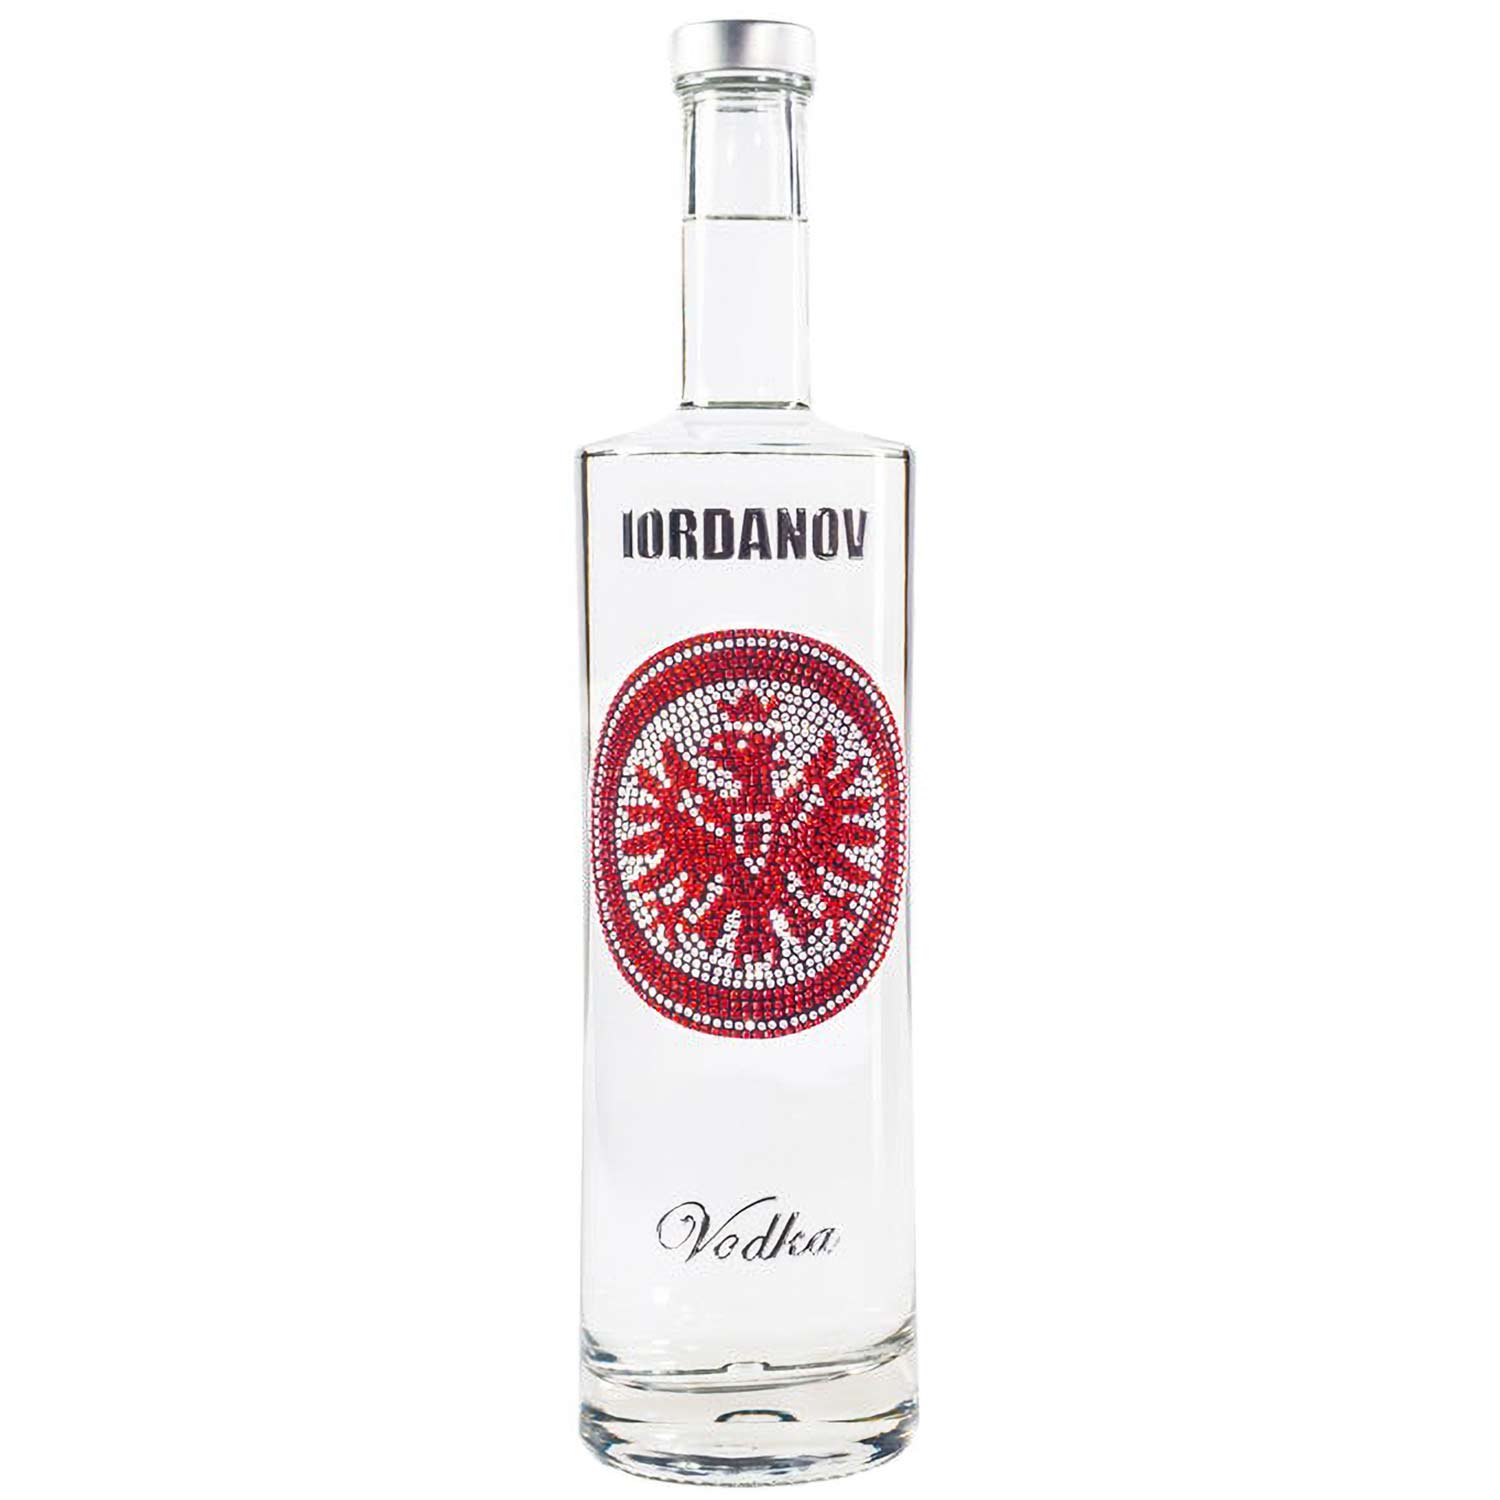 Bild 1: Eintracht Vodka 1l IORDANOV Vodka (60€/L)